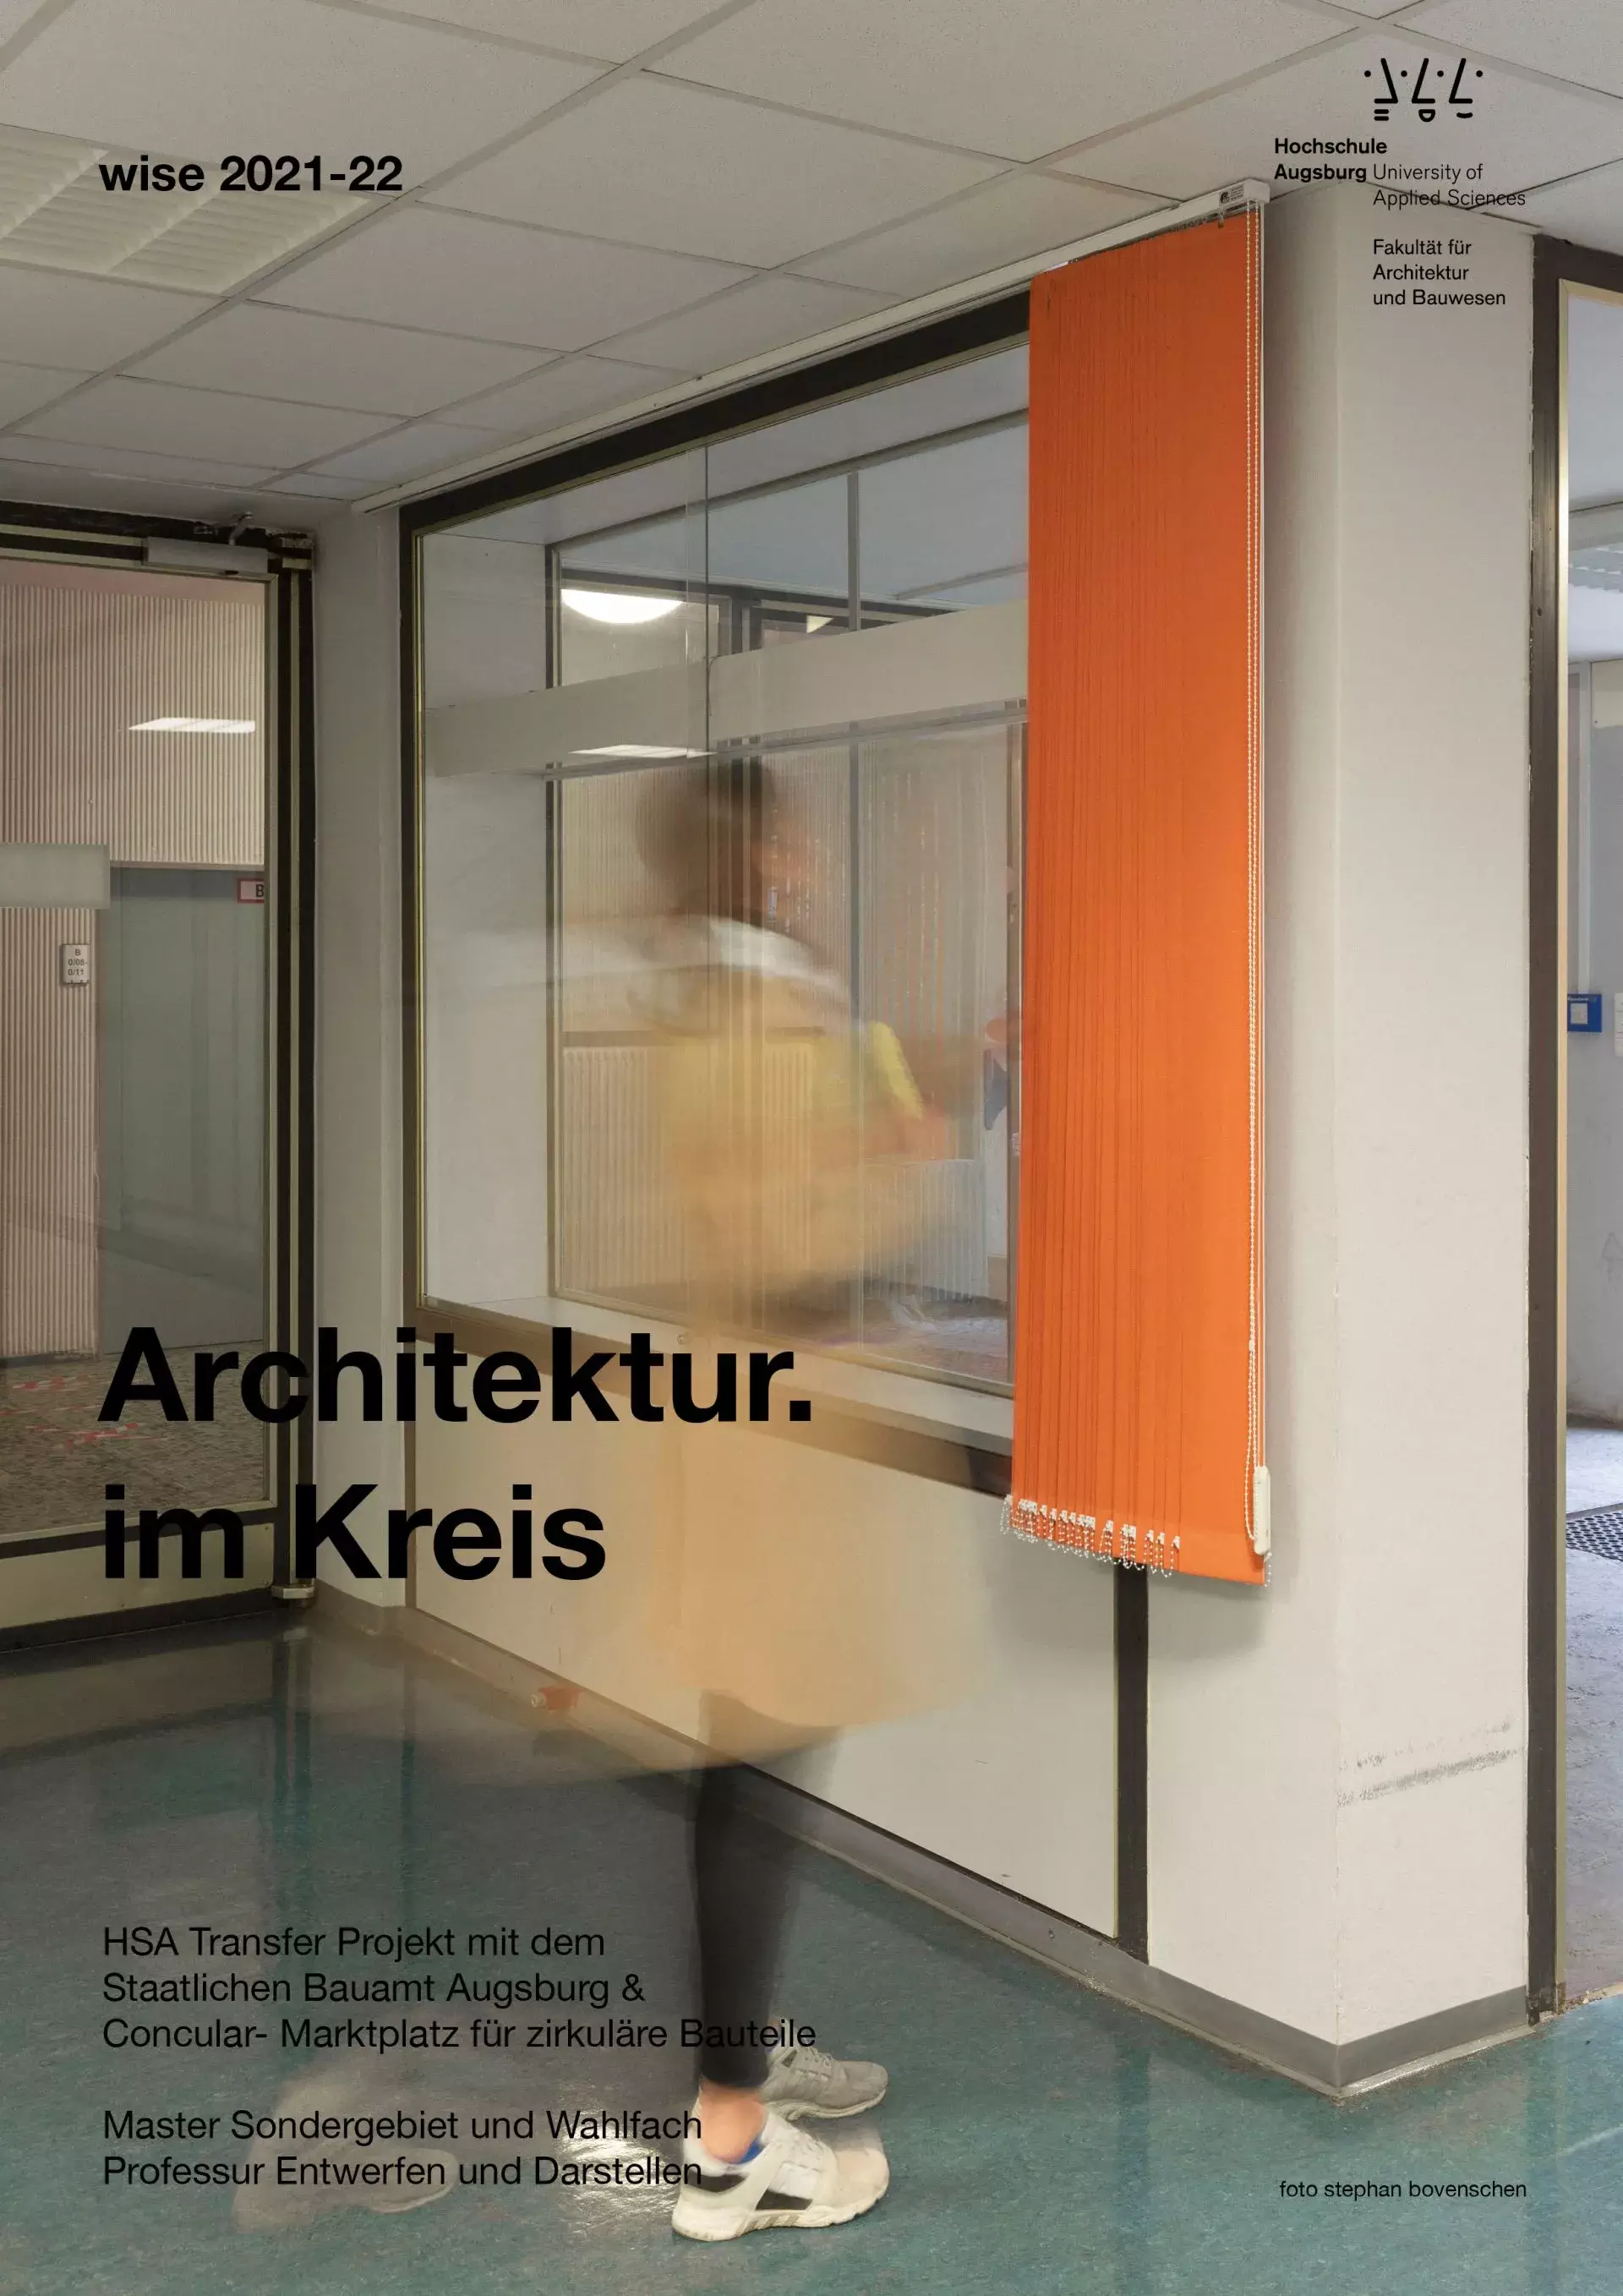 Poster: Architektur. Im Kreis